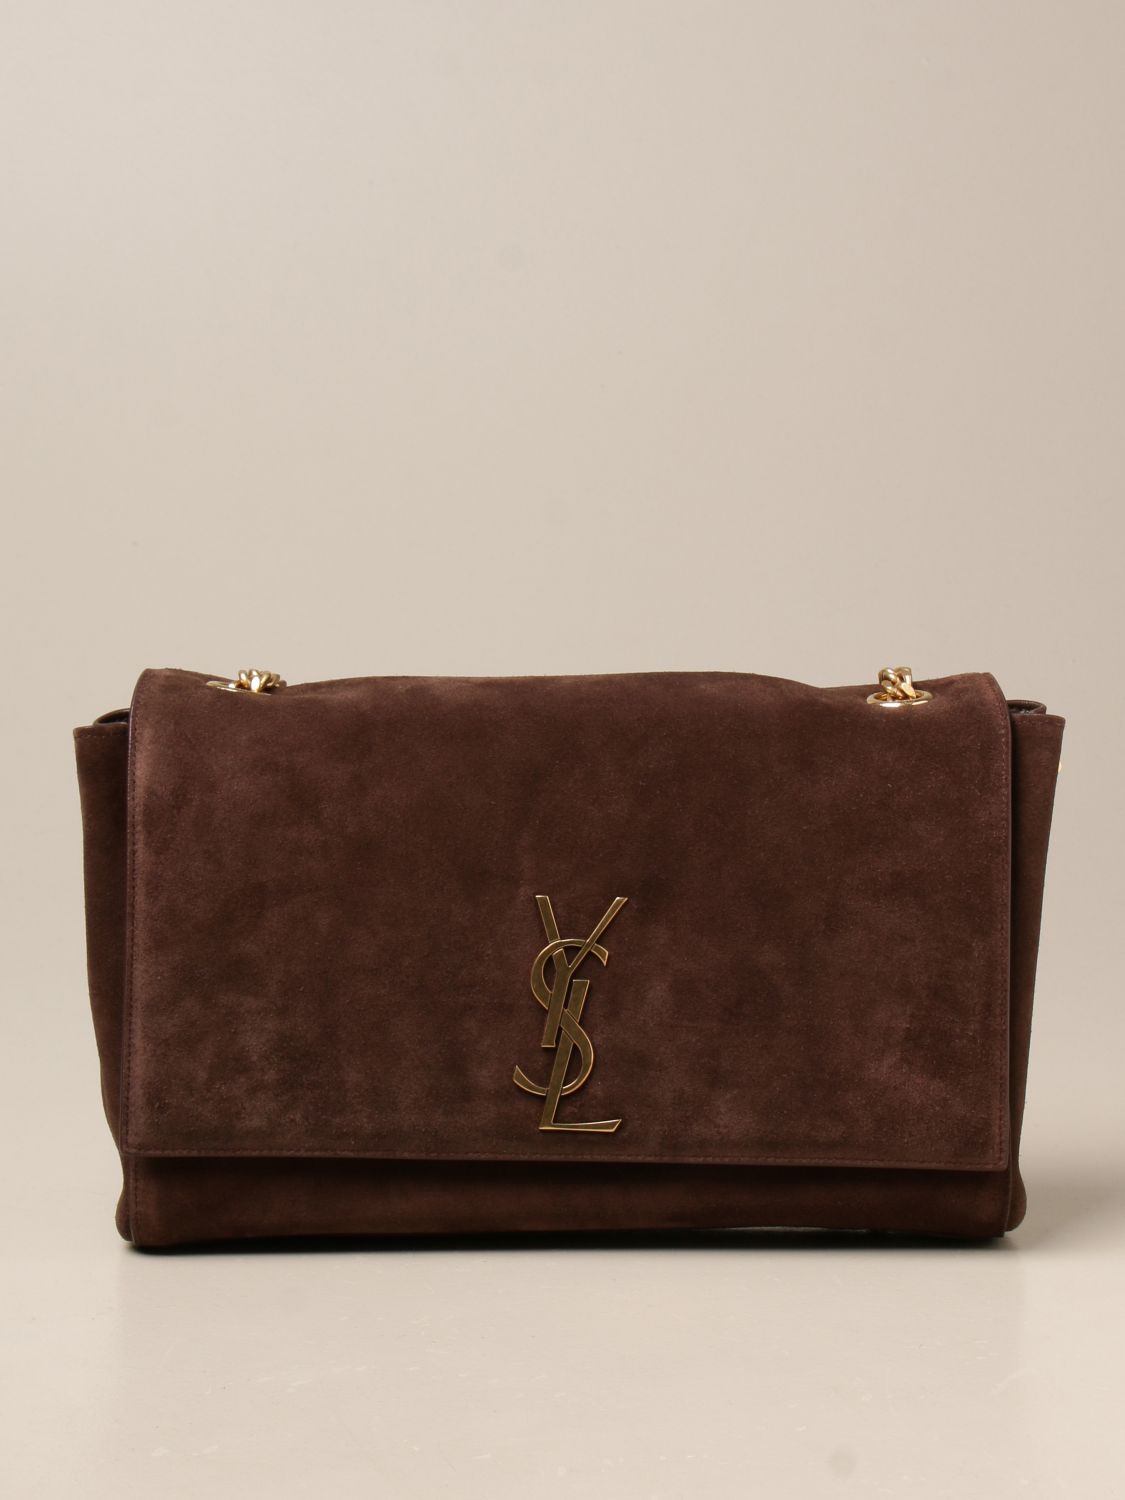 SAINT LAURENT: Kate leather bag with logo - Brown  Saint Laurent crossbody  bags 553804 0UD7W online at